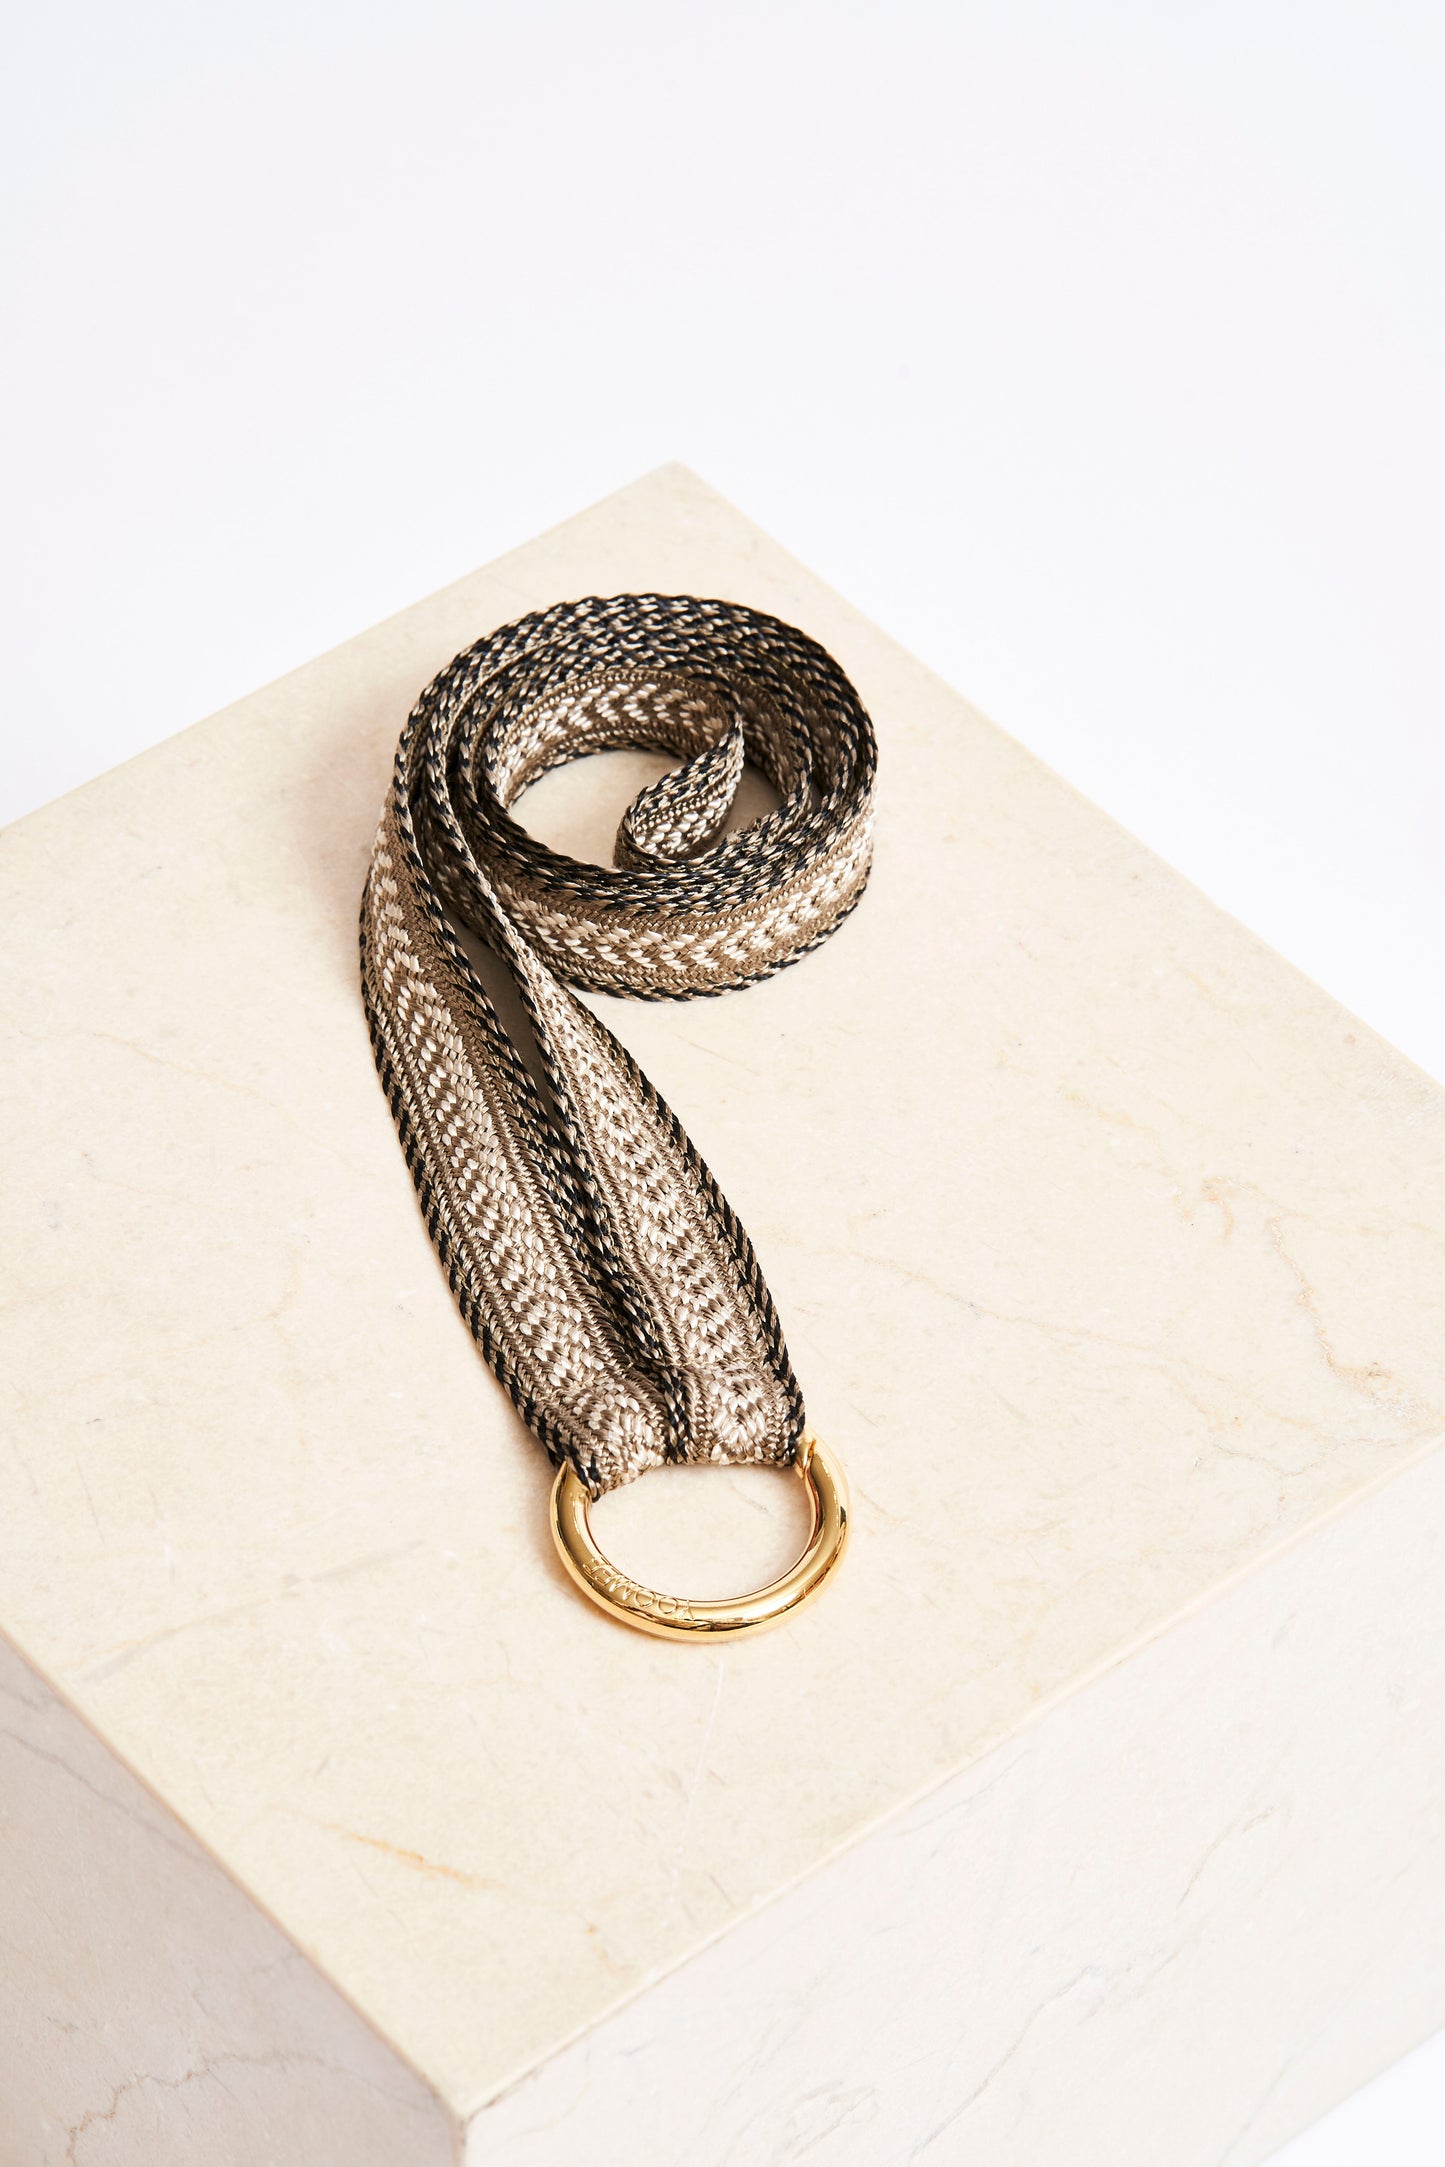 keychain band - ZAHRA - big snake